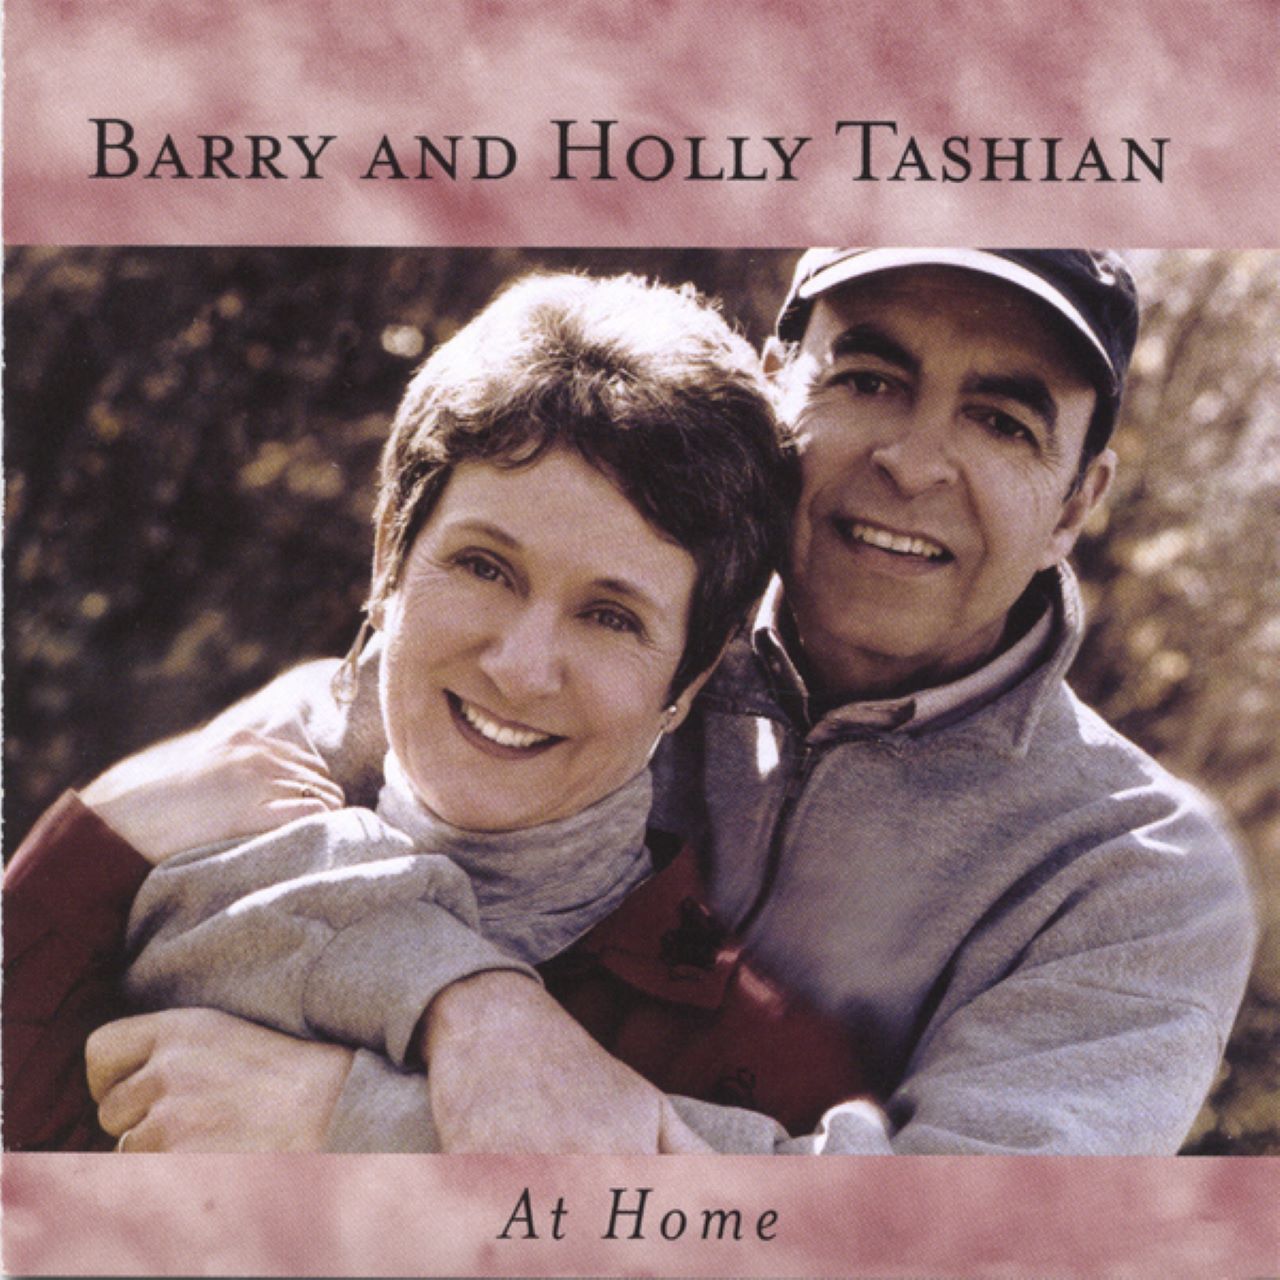 Barry & Holly Tashian - At Home cover album